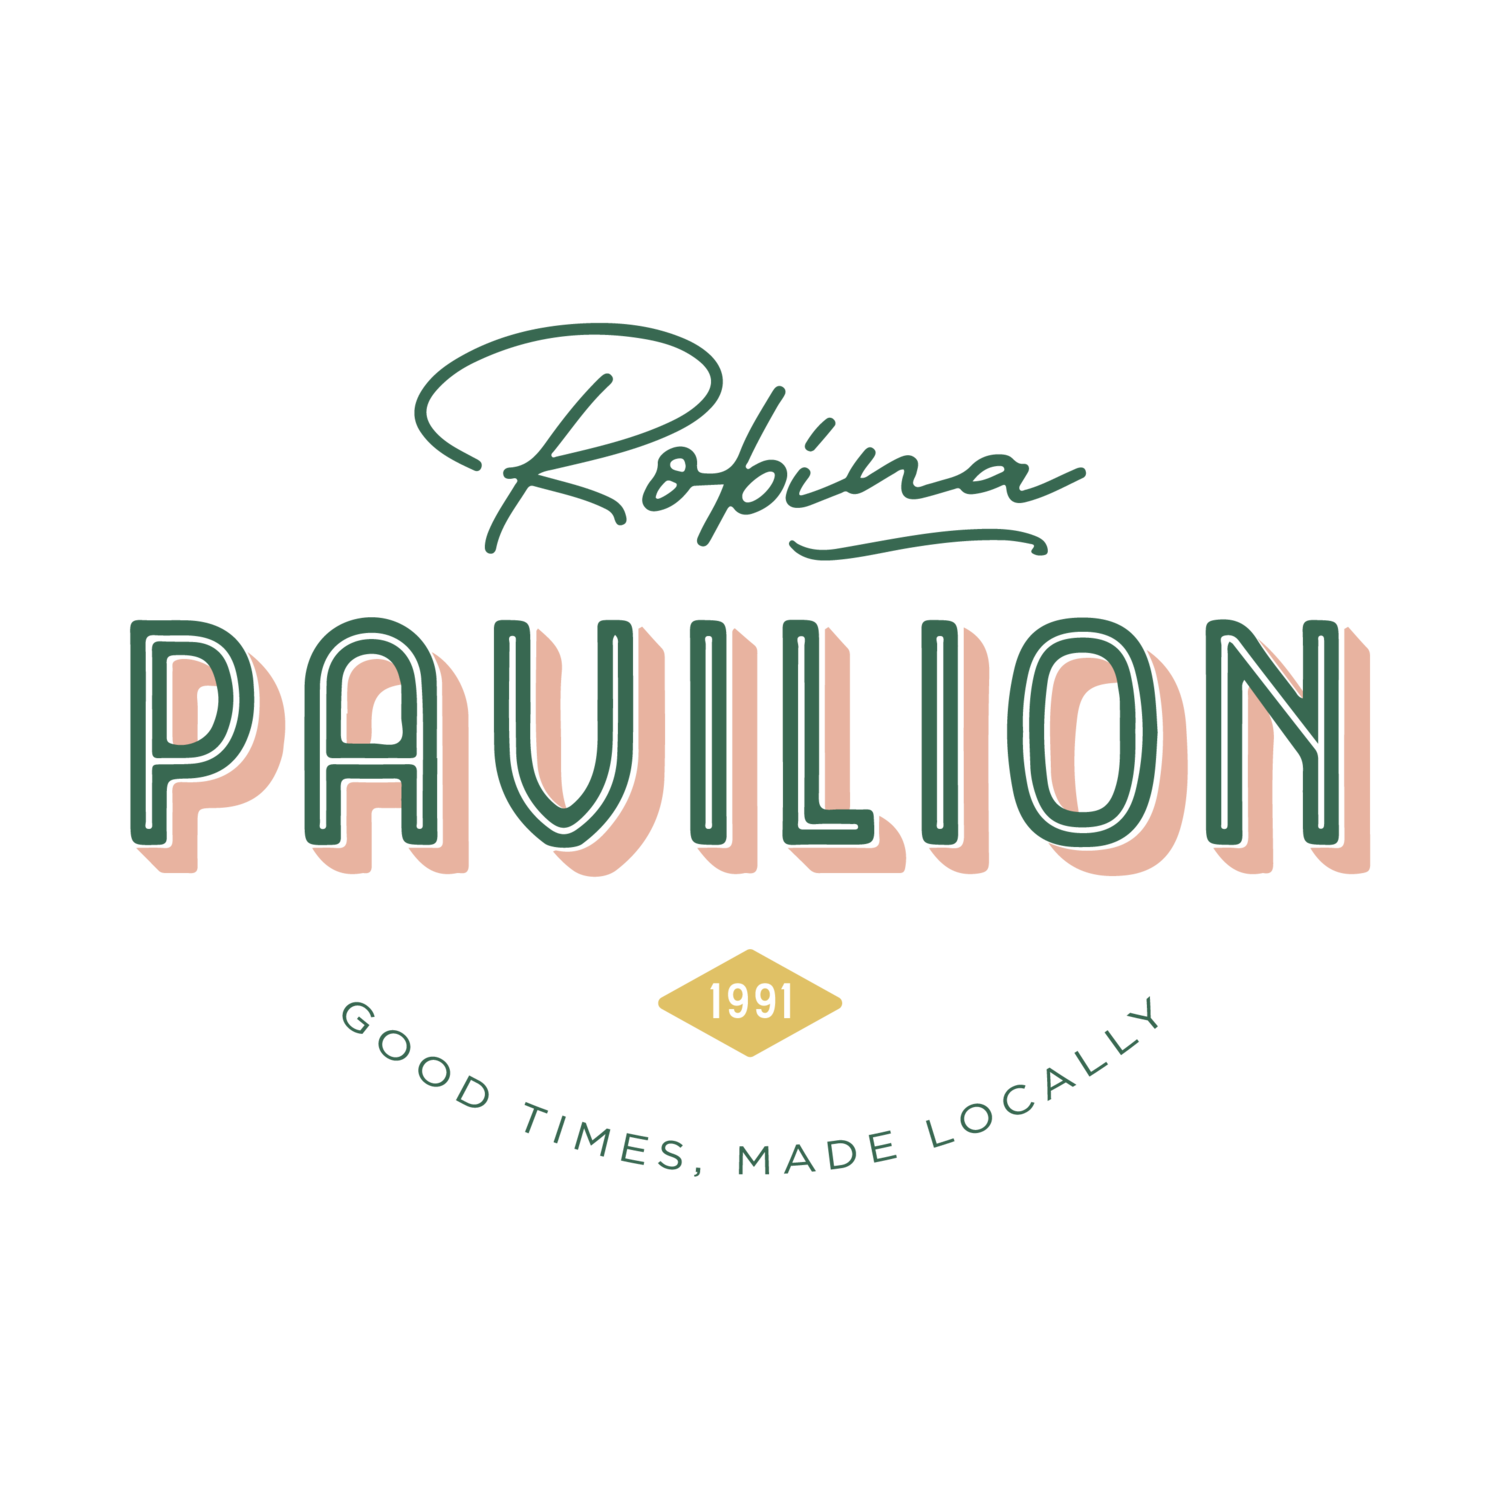 Robina+pavilion Primary+logo Cmyk